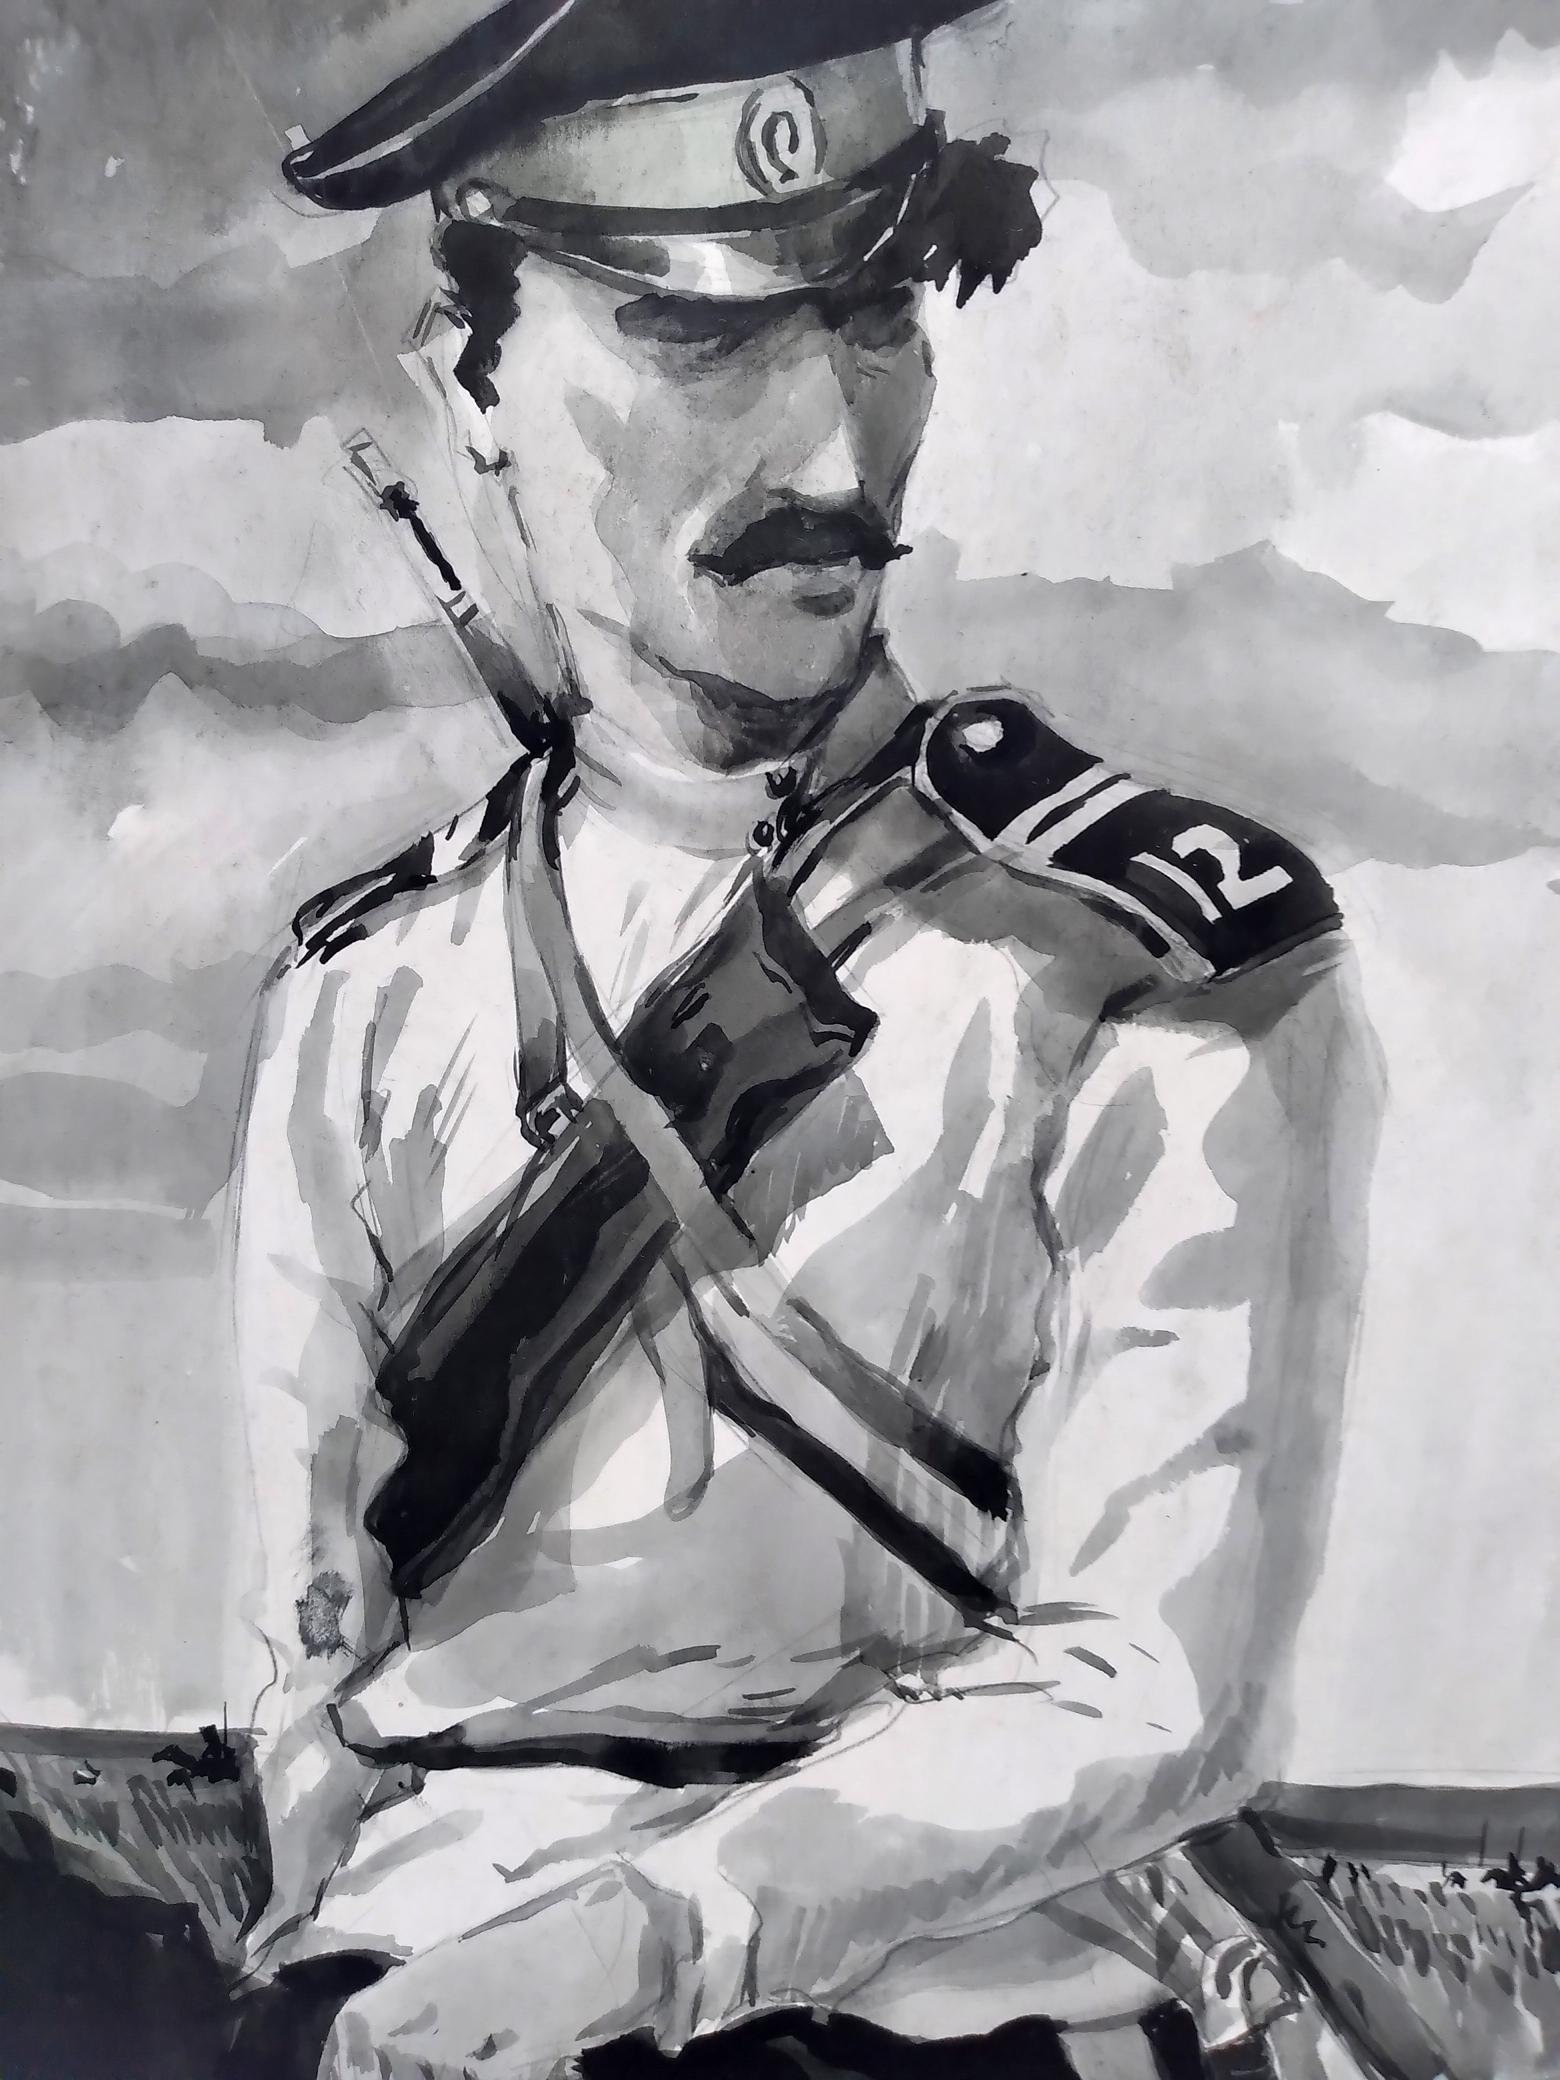 Oleg Litvinov's interpretation of a "Portrait of a Soldier by the River" in watercolor